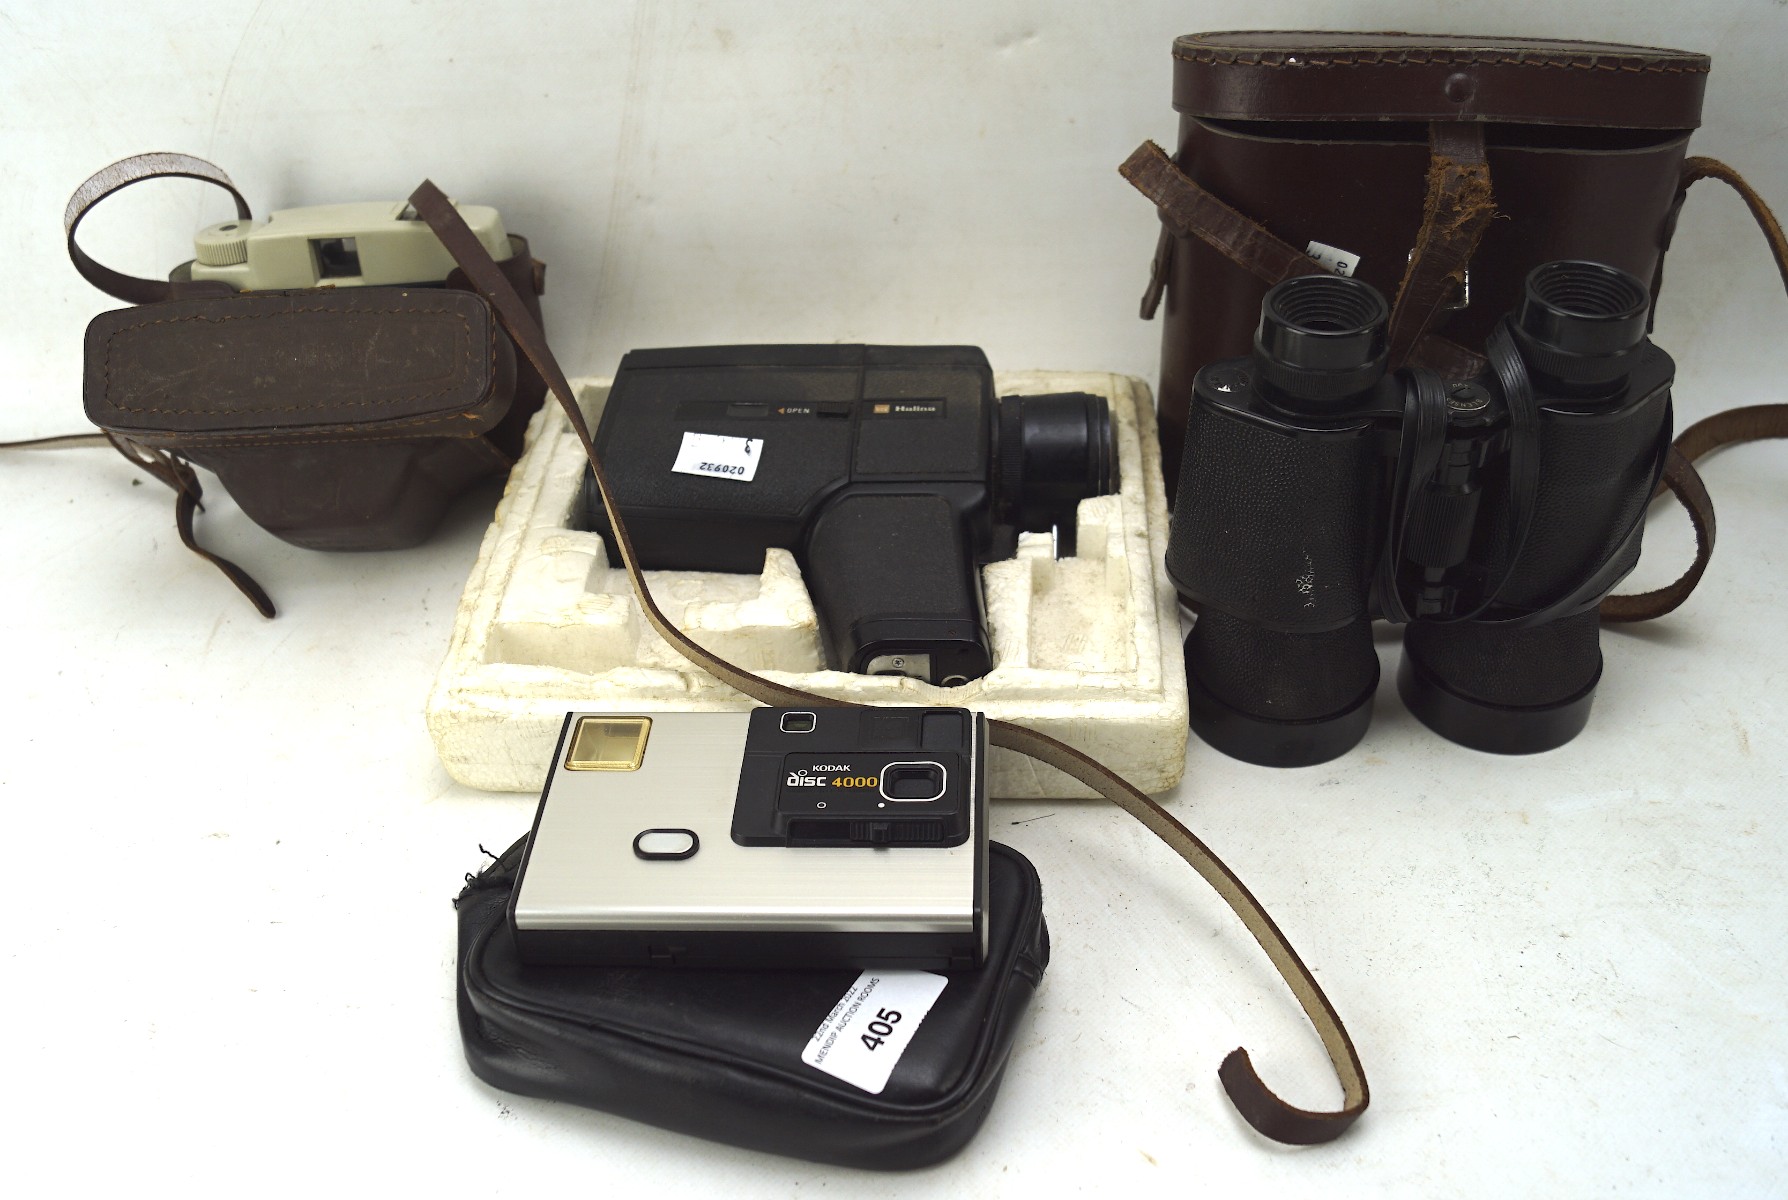 A pair of binoculars, Ilford Sporti 4 camera, a Hallina Super 8, and more